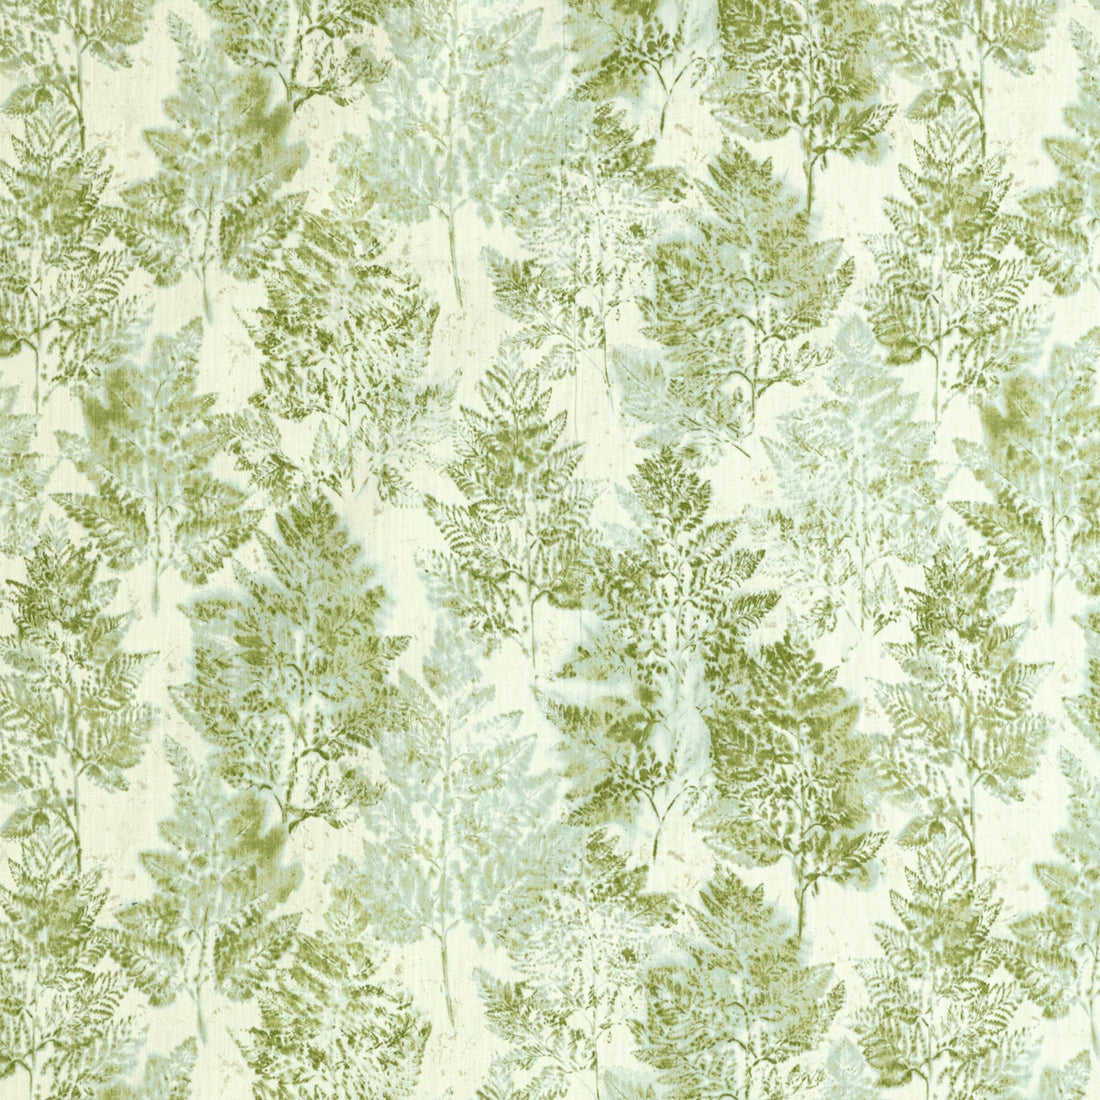 Heiki Fern fabric in linden color - pattern HEIKI FERN.23.0 - by Kravet Basics in the Monterey collection